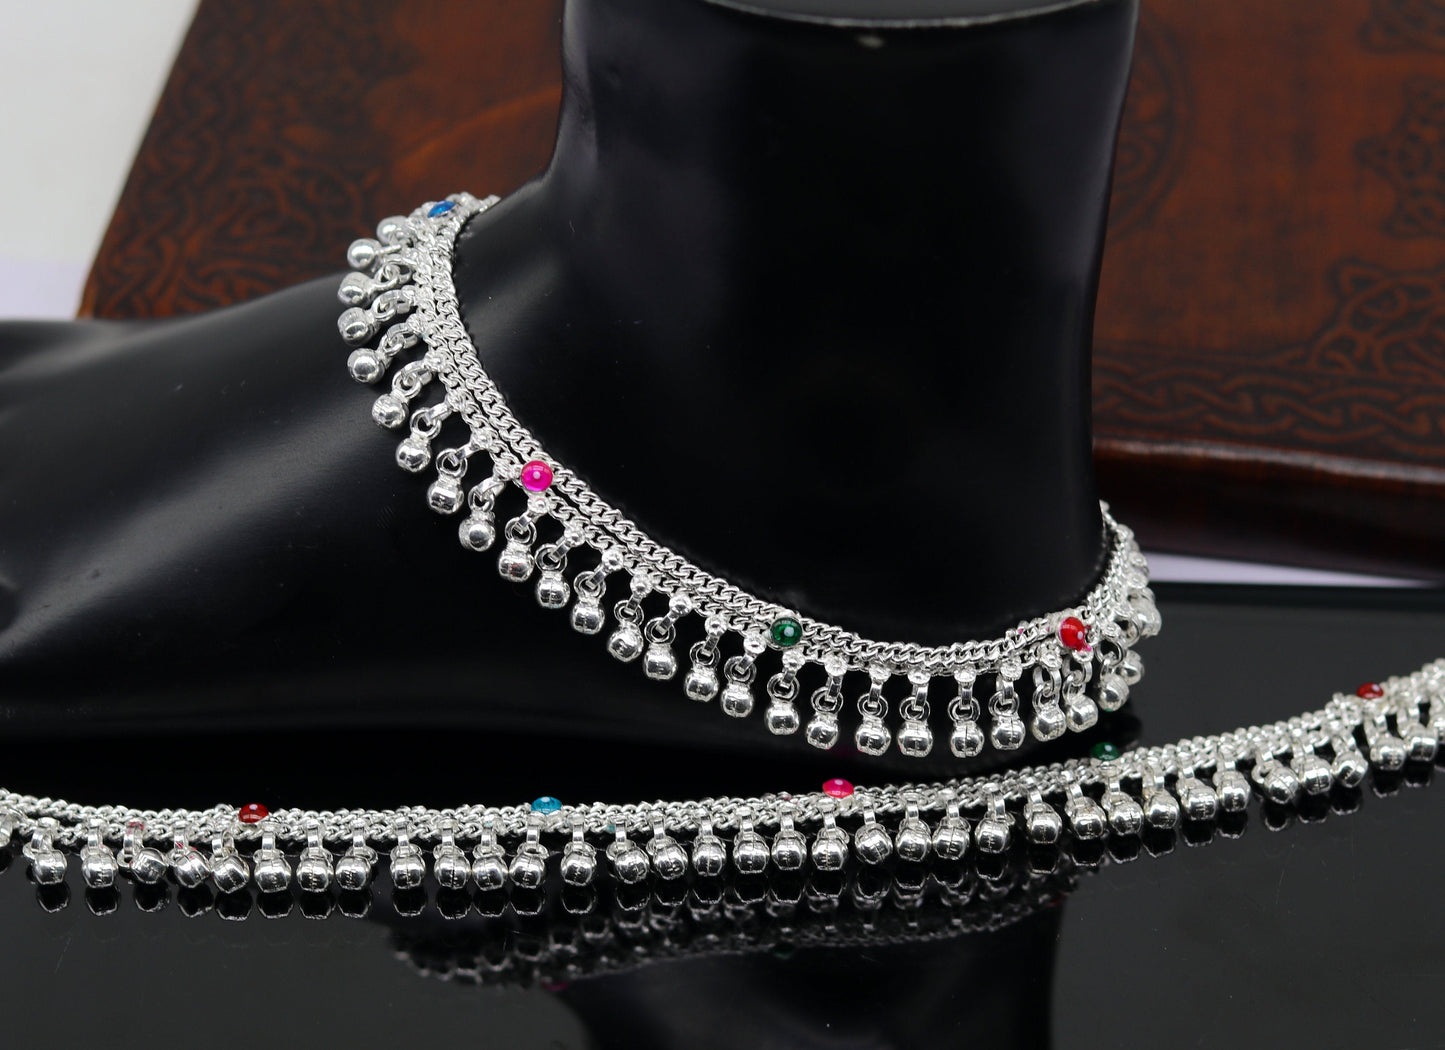 10" Sterling silver handmade double chain anklets bracelet, best jingling noisy ankles feet bracelet charm belly dance jewelry india ank259 - TRIBAL ORNAMENTS